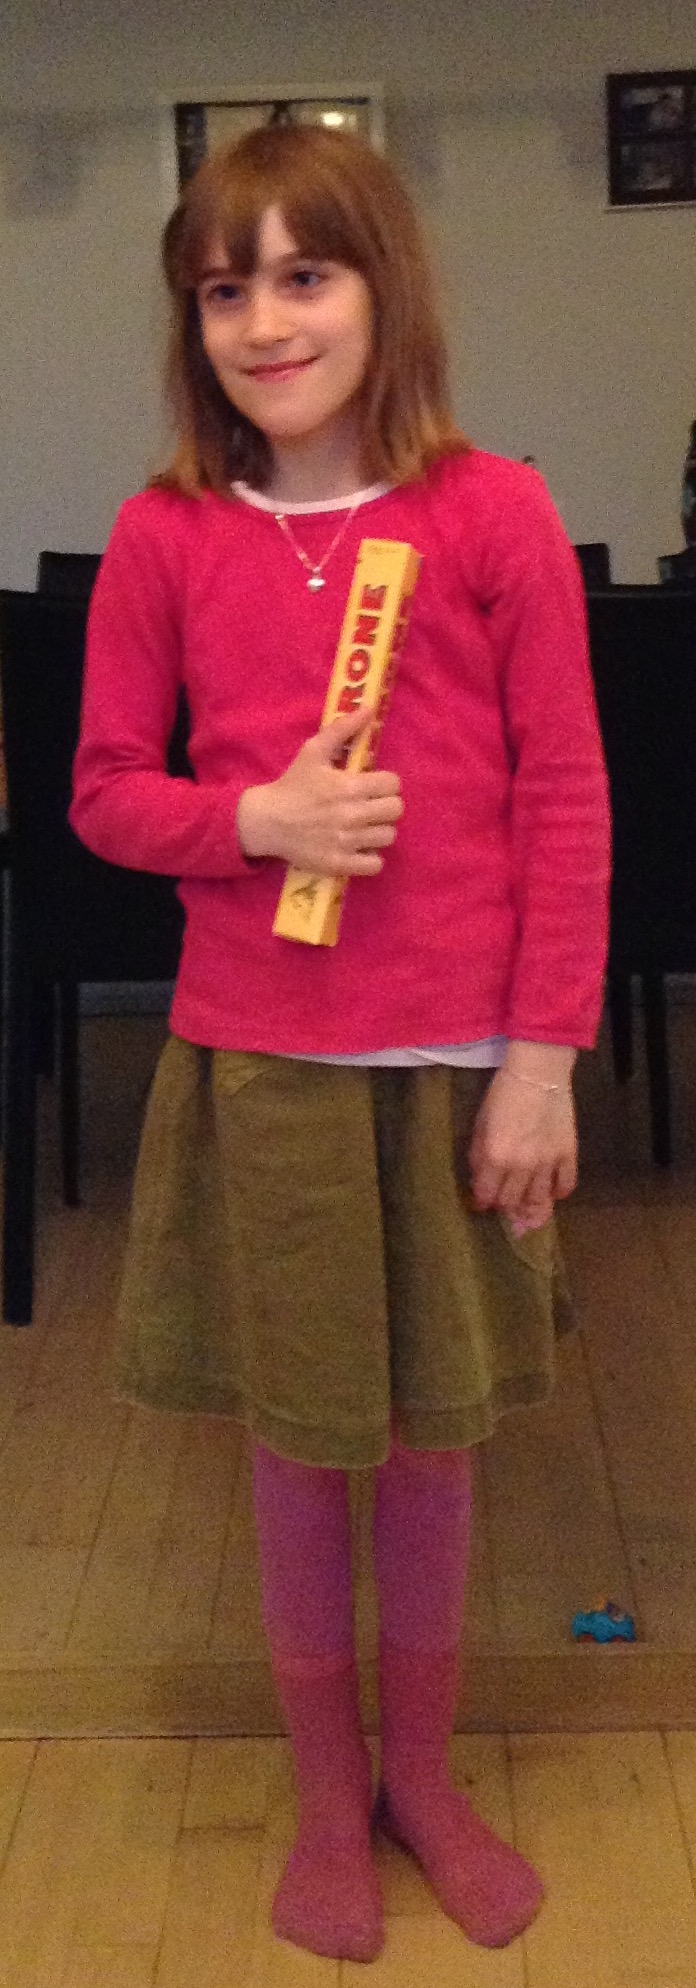 Marikkas 10. Toblerone billede. (9 år)